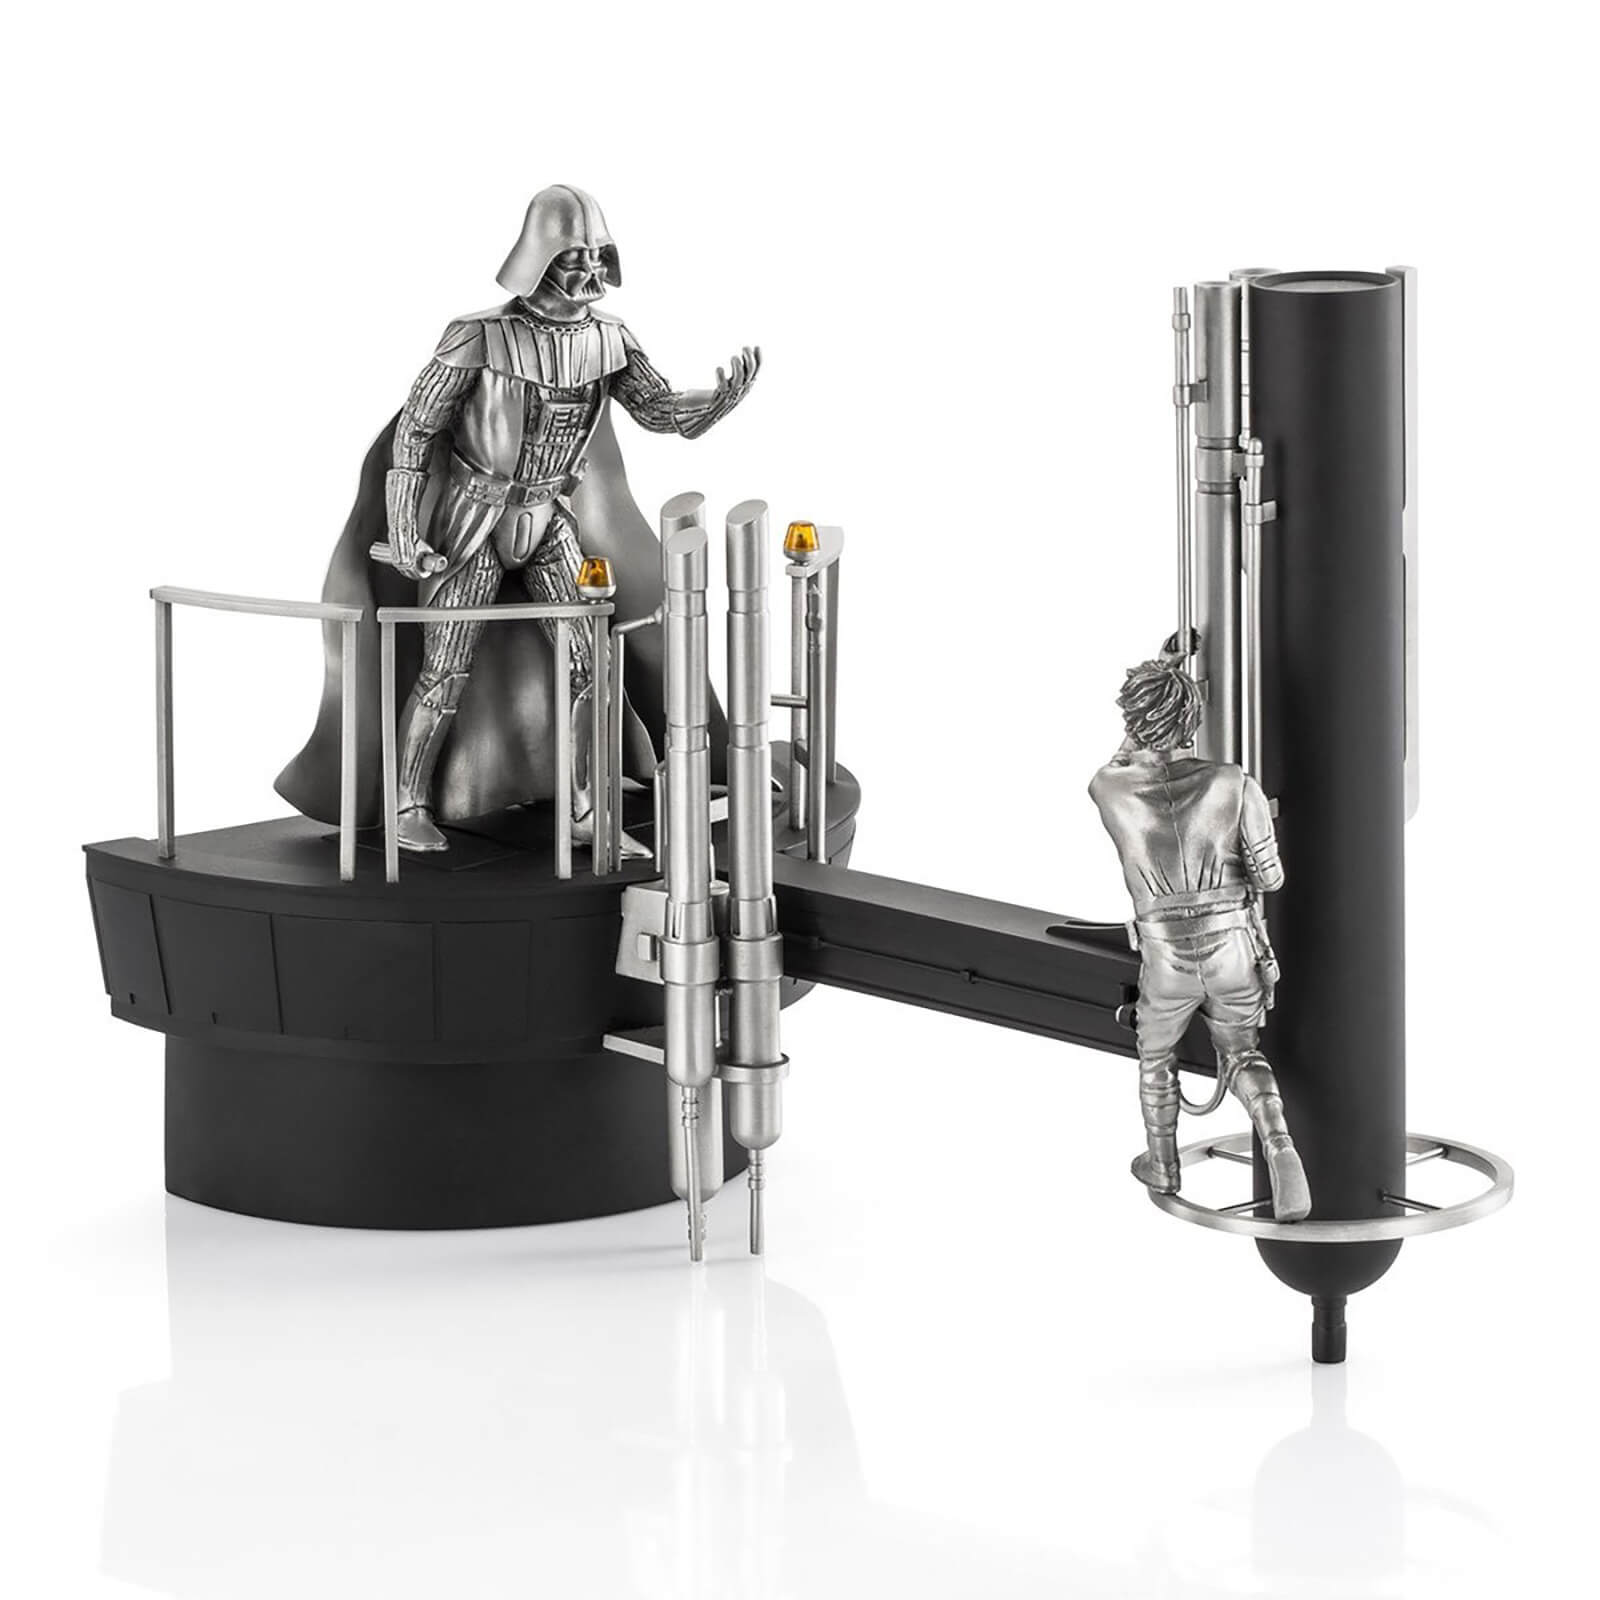 Royal Selangor Star Wars Luke vs. Darth Vader Limited Edition Pewter Diorama 33.5cm (500 Pieces Worldwide)